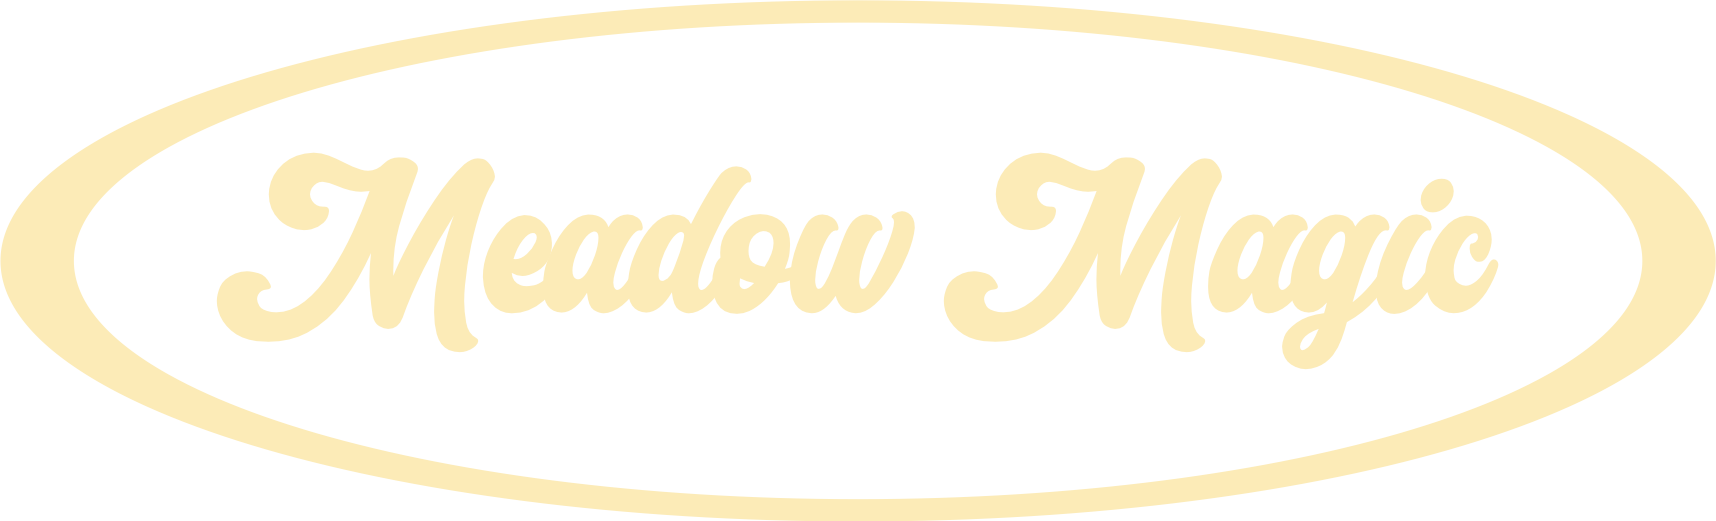 Meadow-Magic